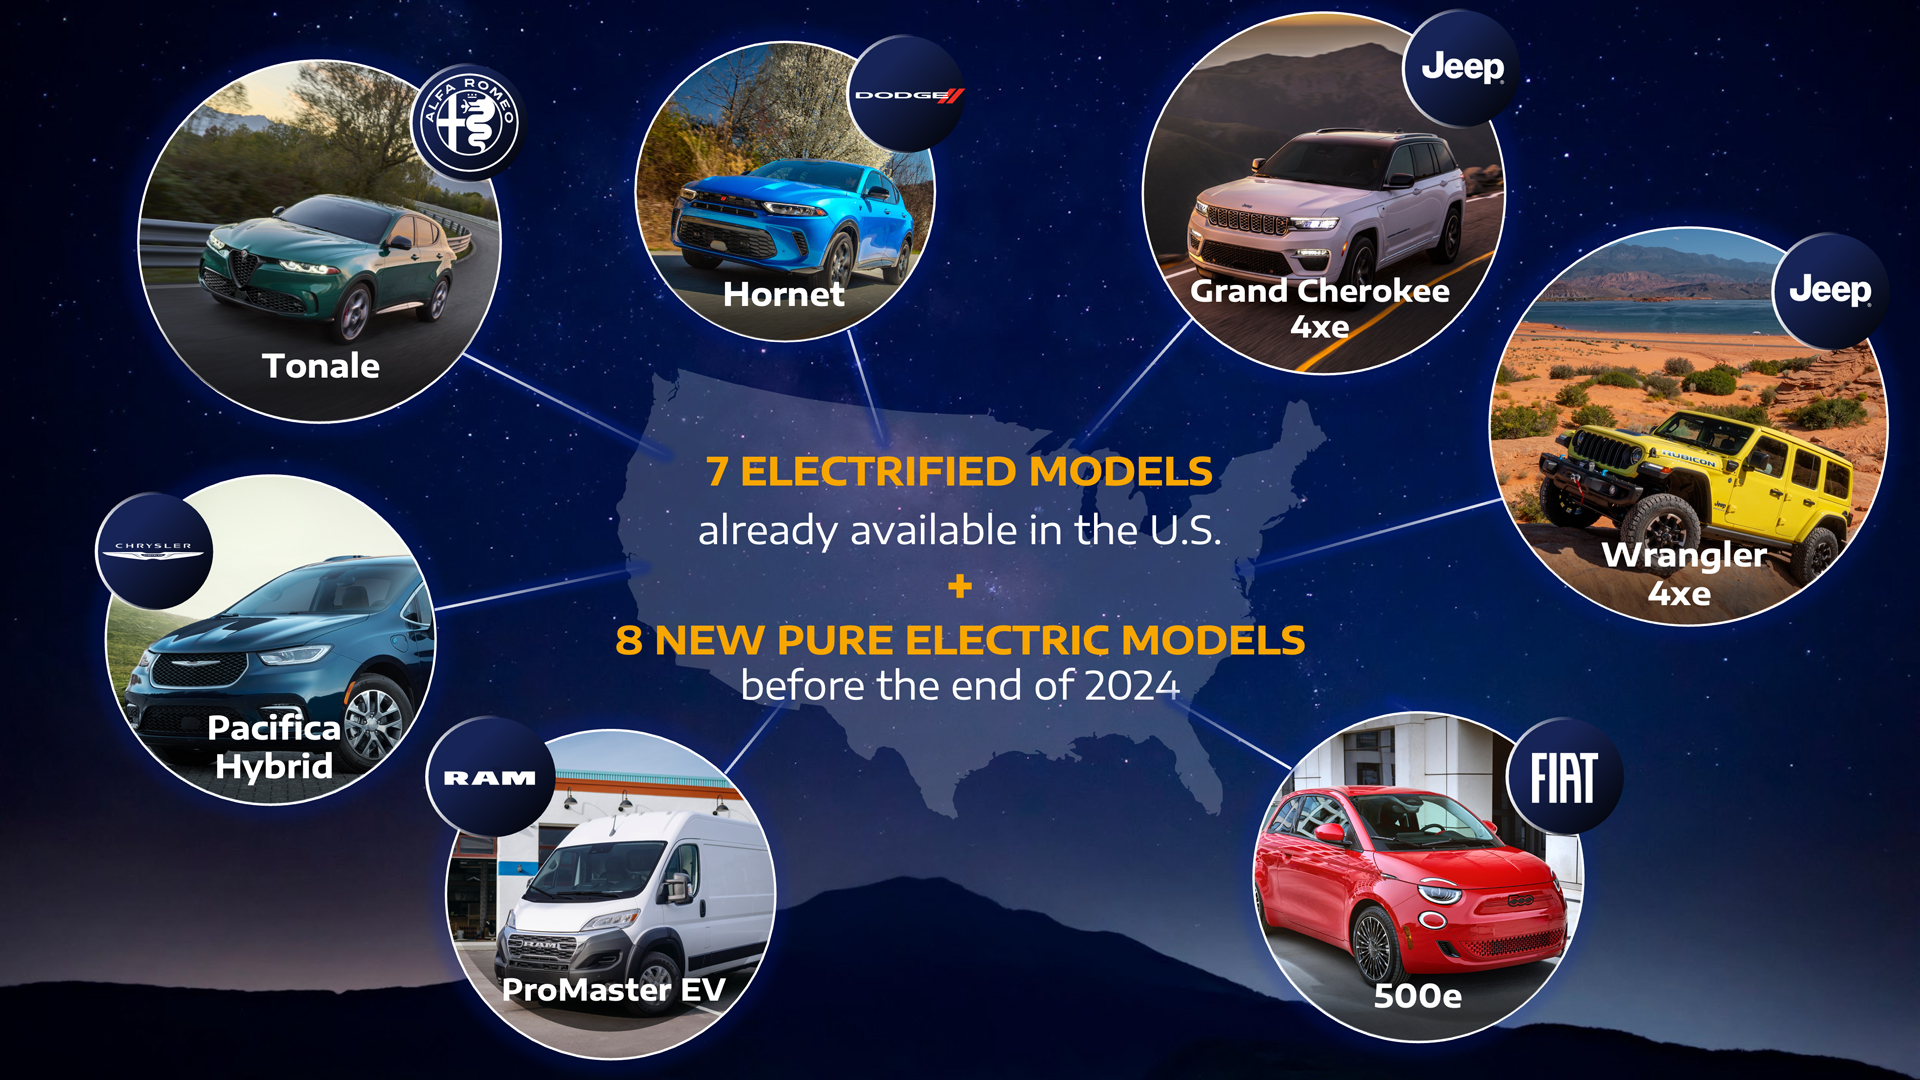 Image of Stellantis electric vehicles in U.S. market